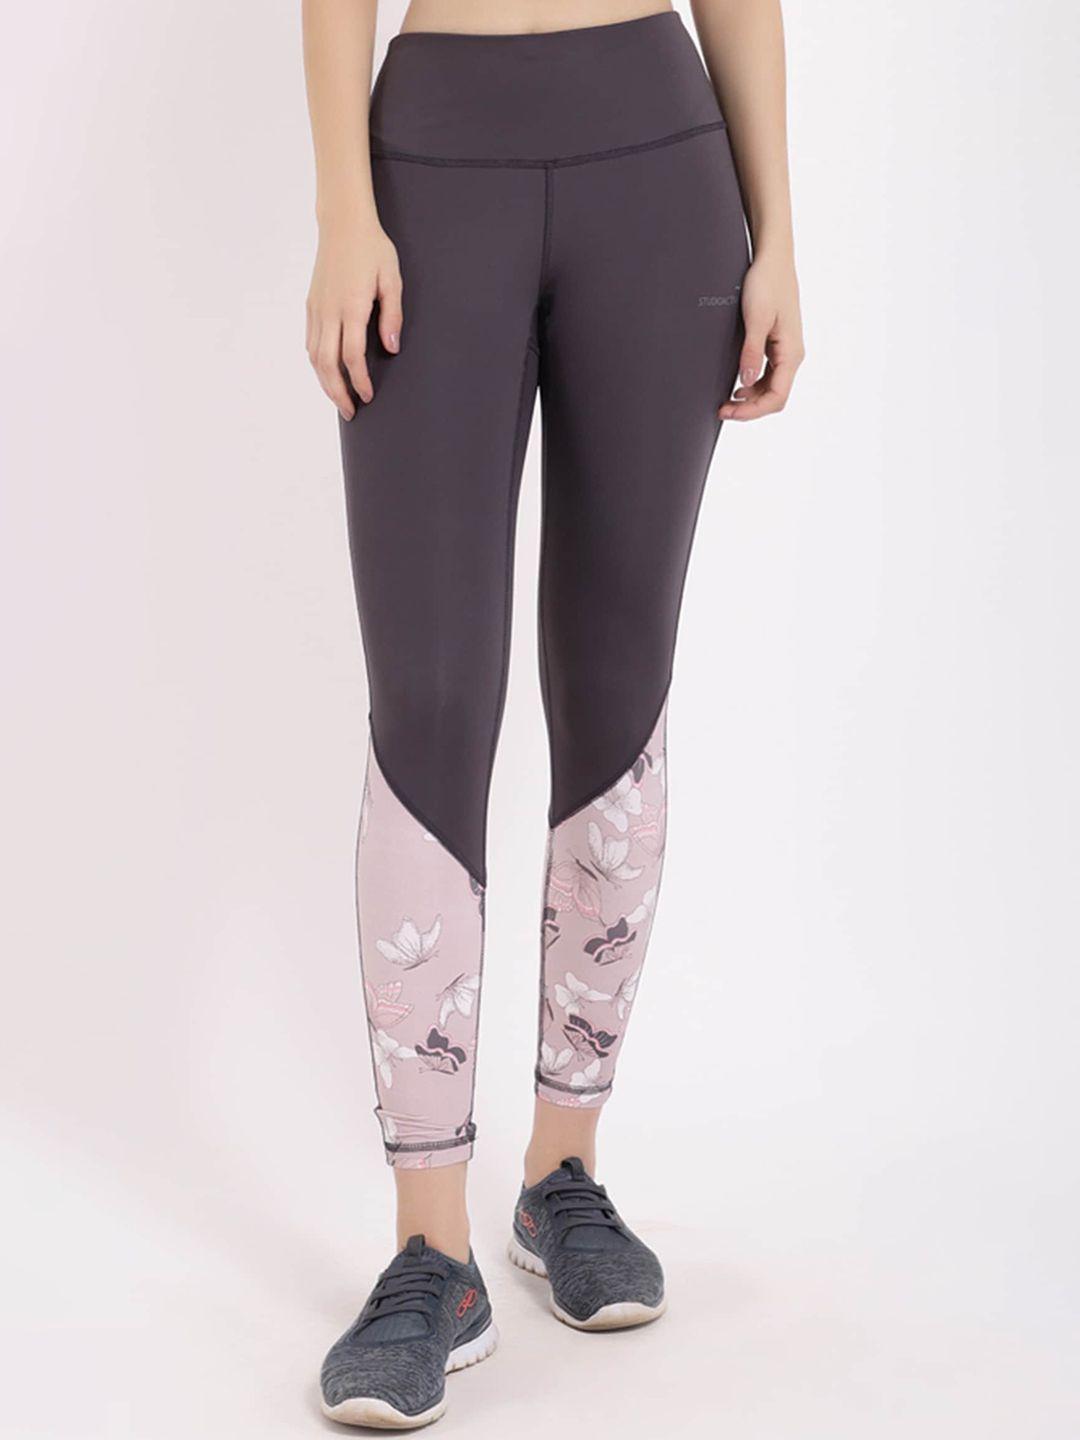 studioactiv women grey  & pink printed tights